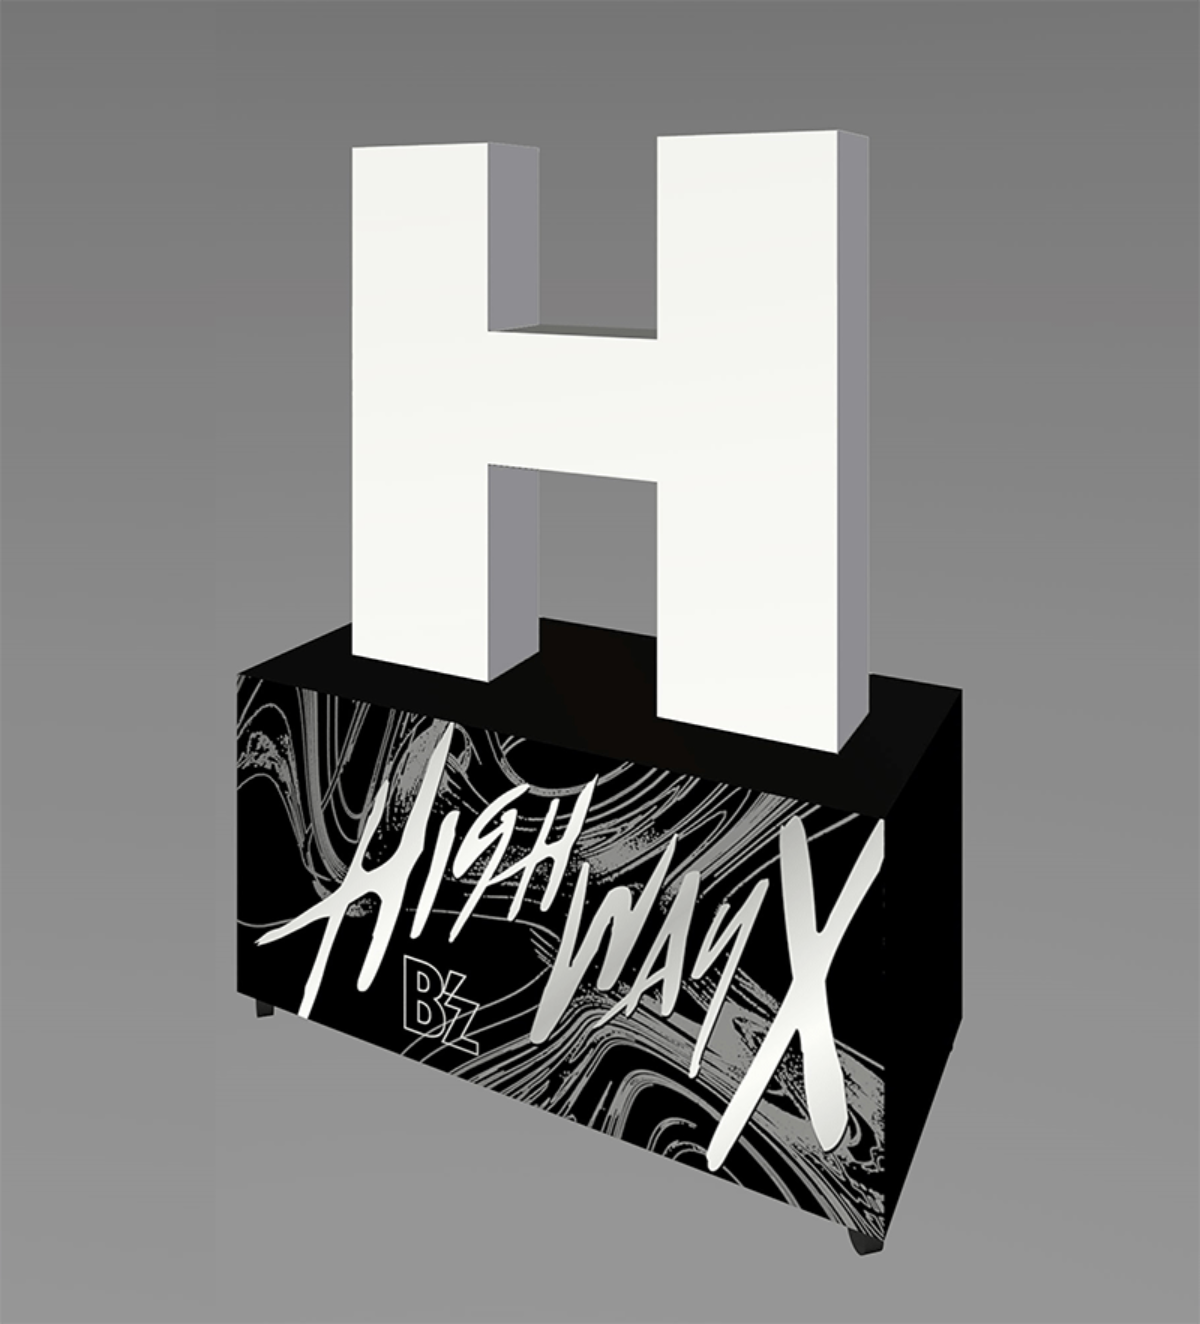 B'z「Highway X」の展示パネルのイメージ画像